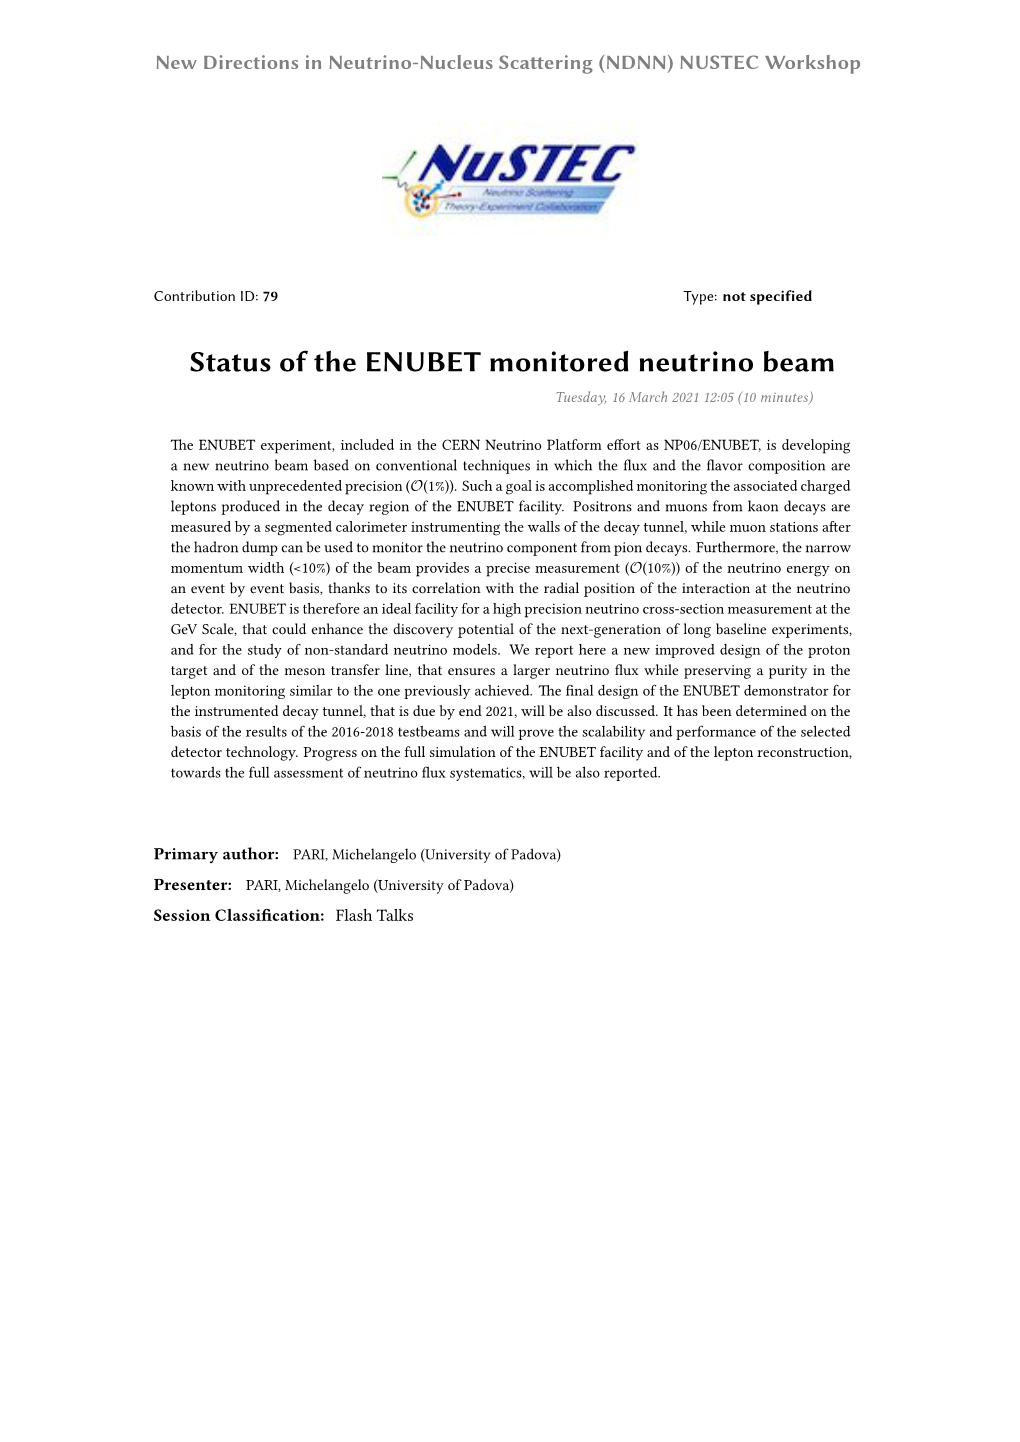 Status of the ENUBET Monitored Neutrino Beam Tuesday, 16 March 2021 12:05 (10 Minutes)